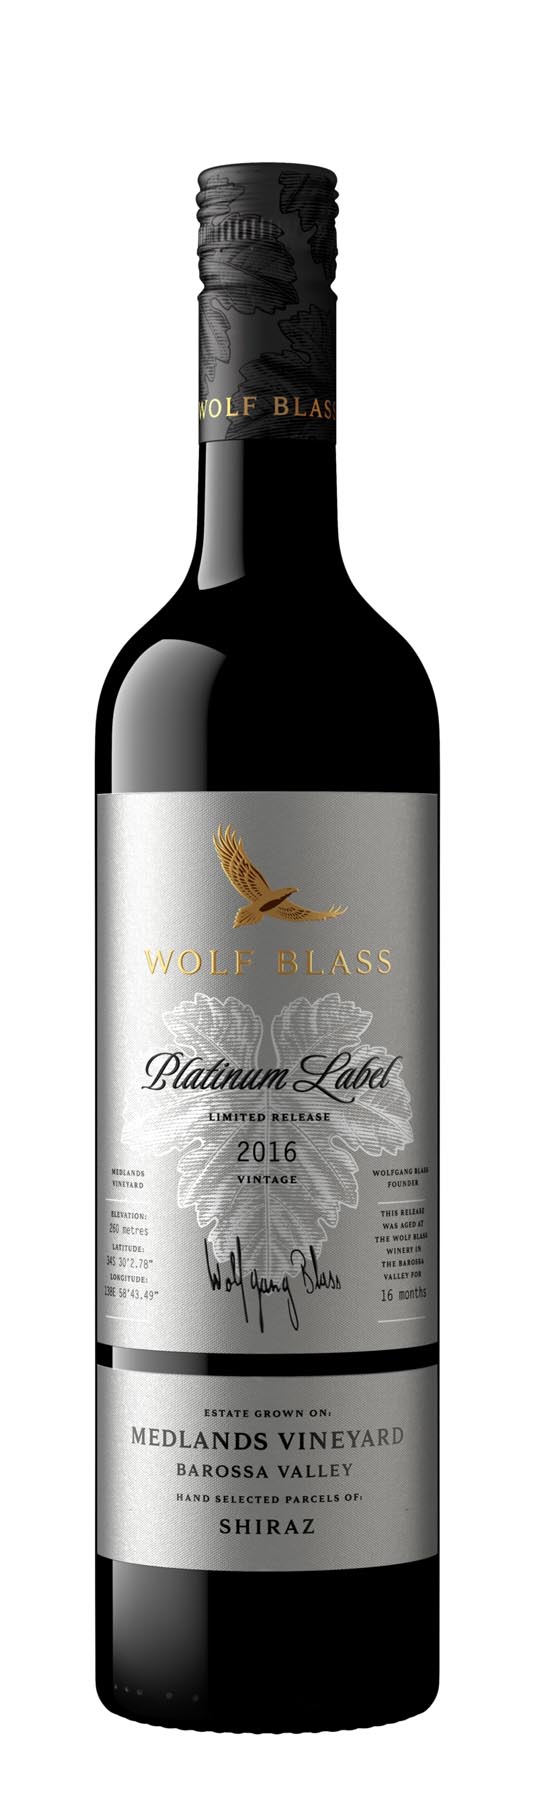 Blass Label Medlands Vineyard Shiraz 2016 – Winepilot.com